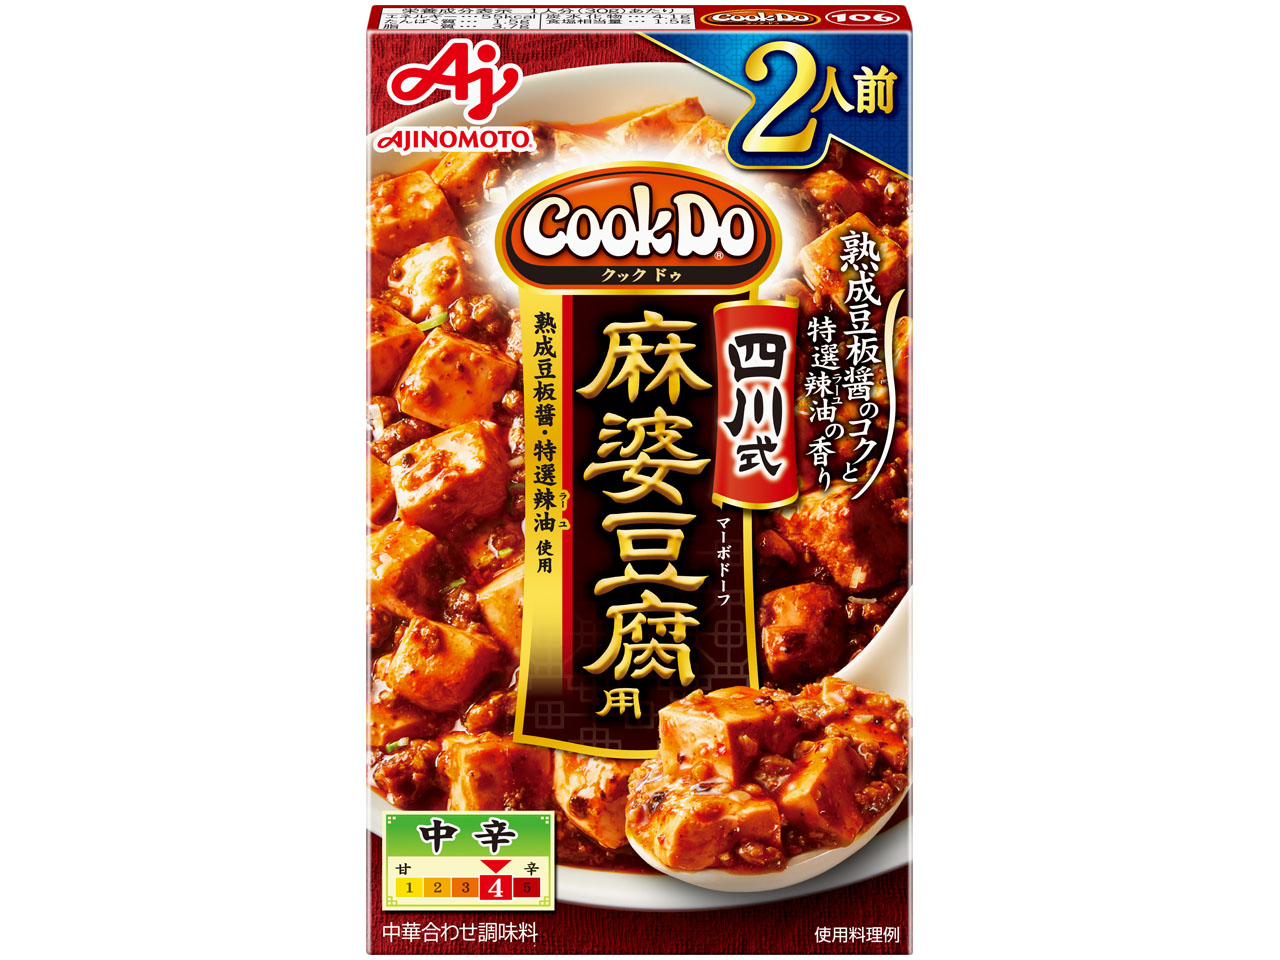 「Cook Do」四川式麻婆豆腐用2人前